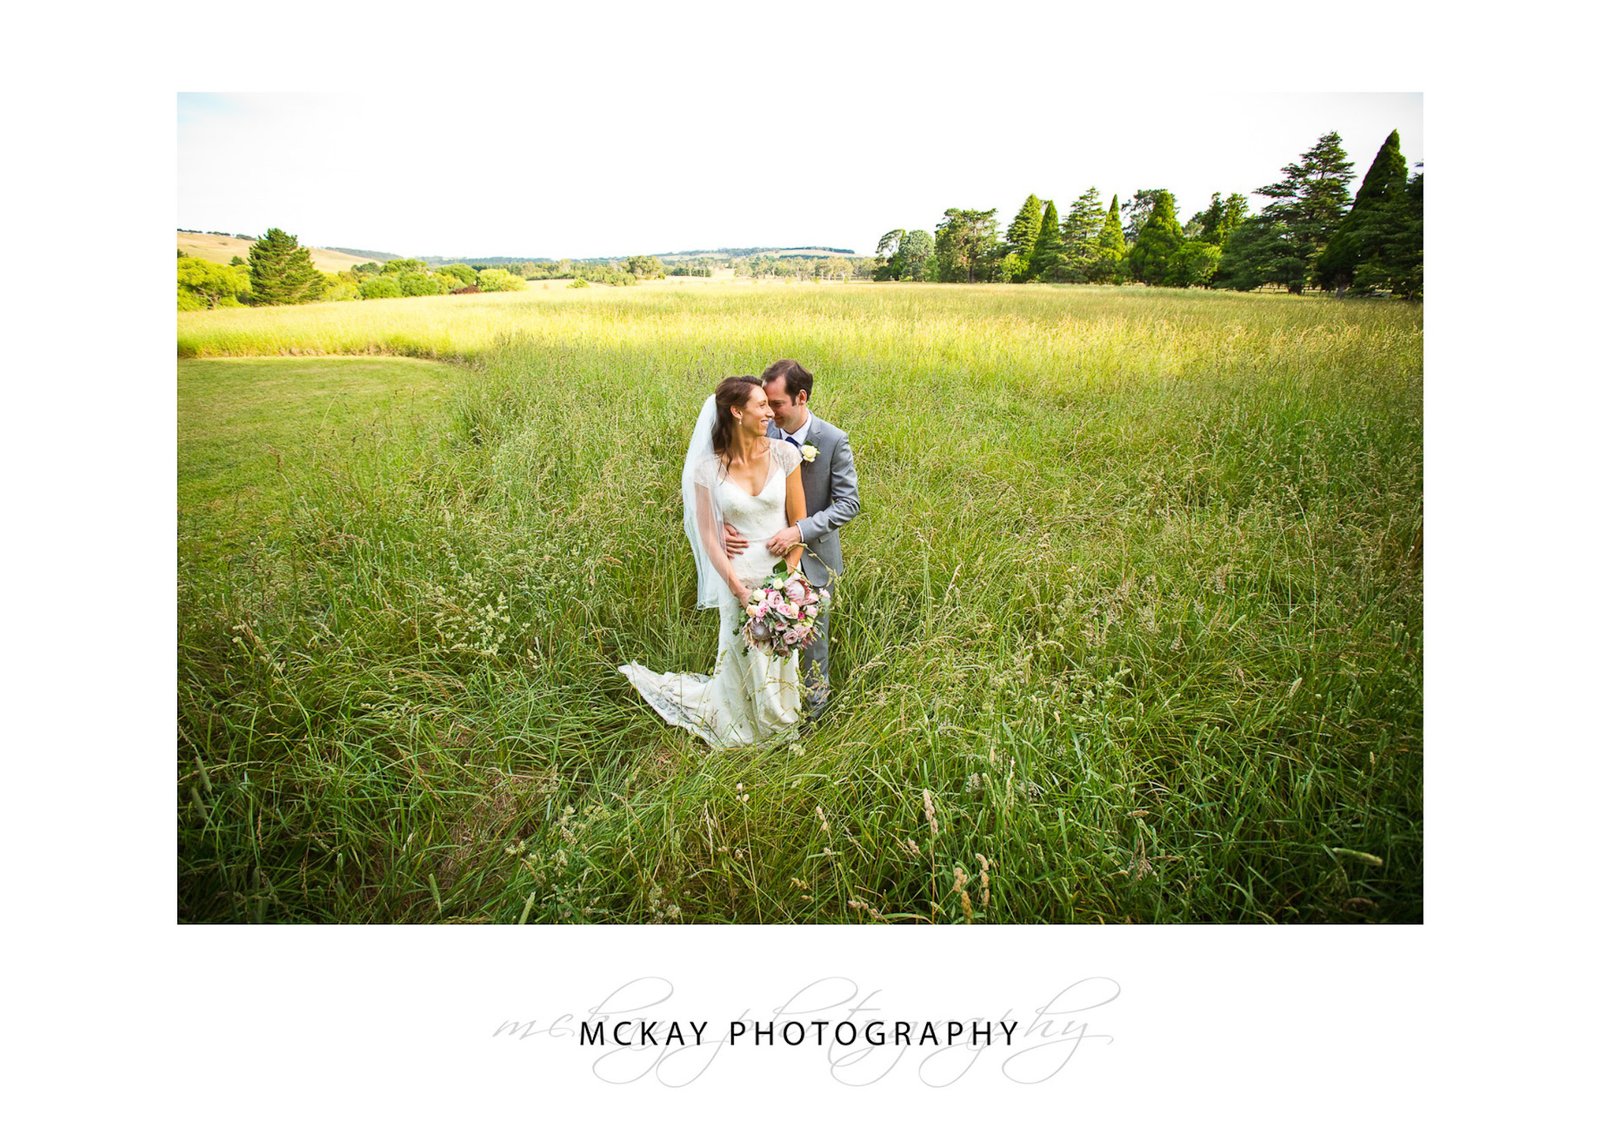 Grass field wide shot wedding photo